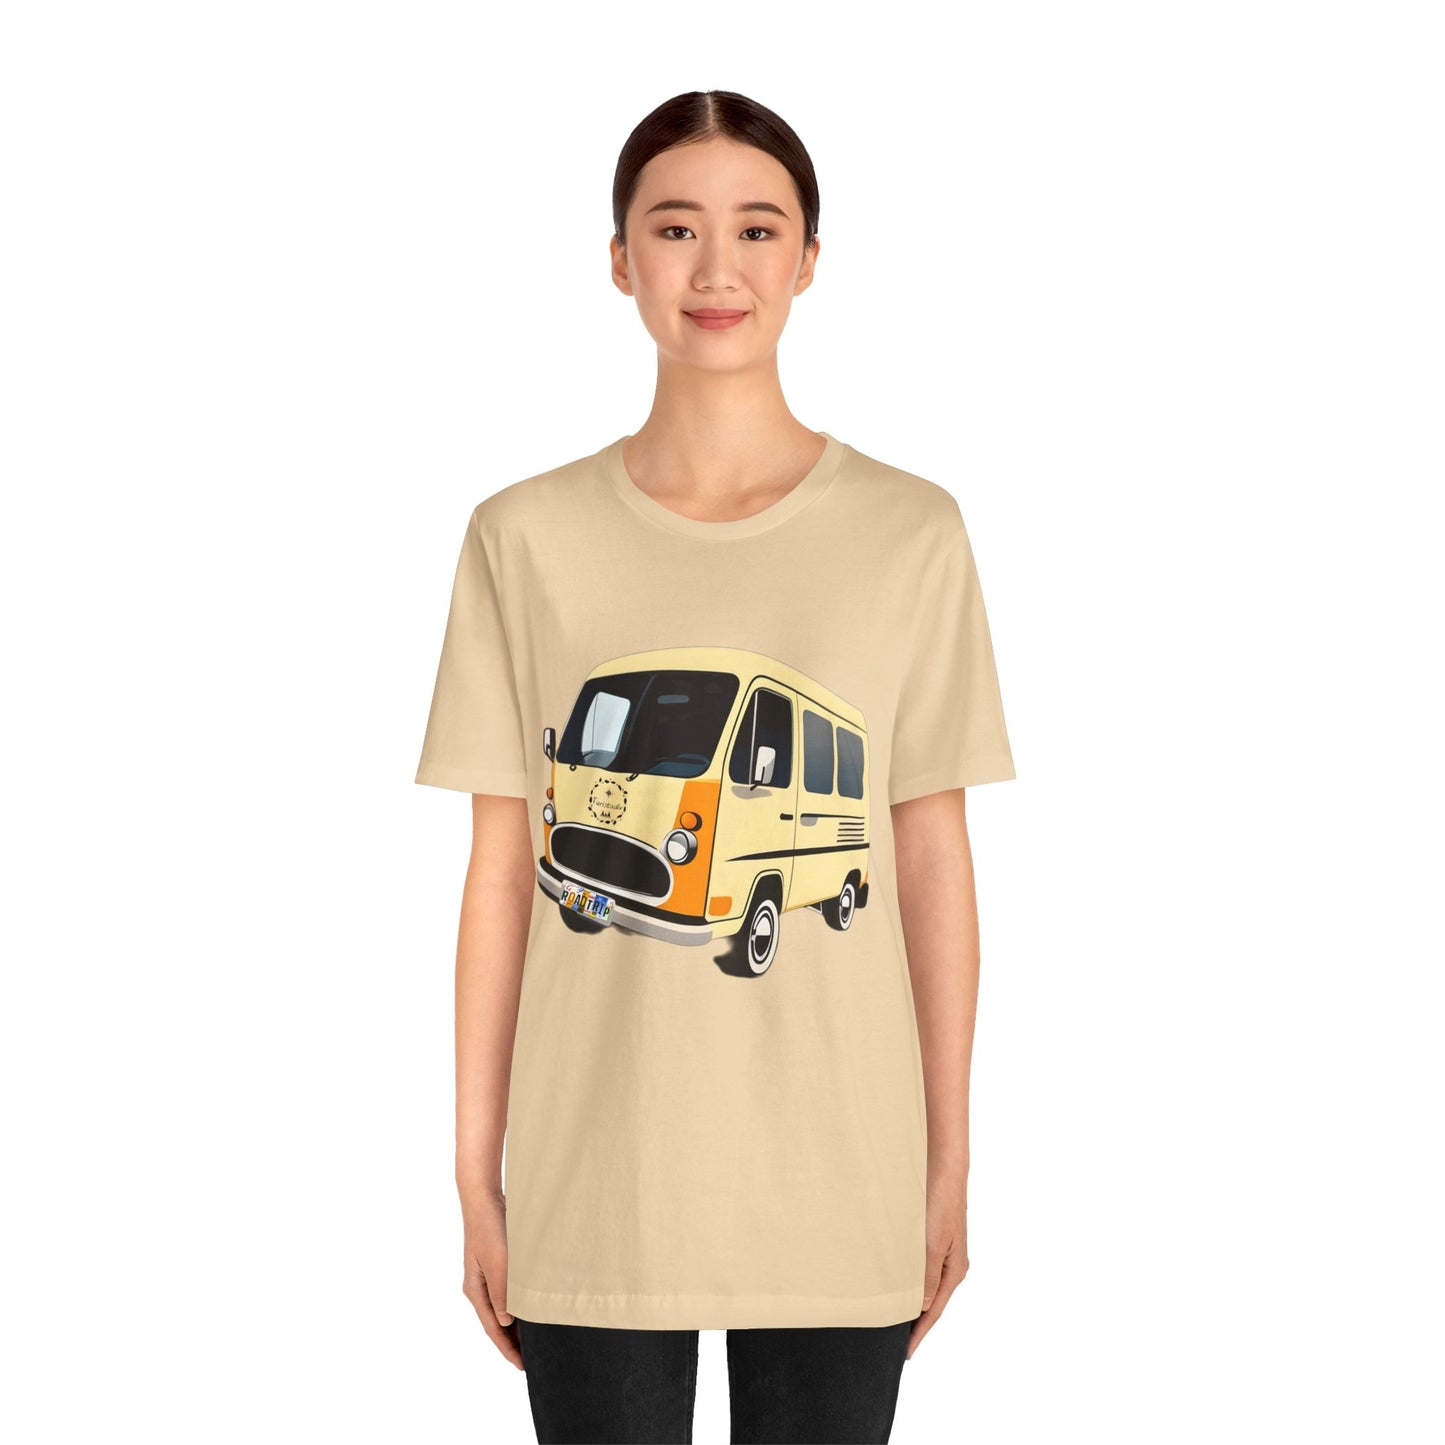 Viajero, Camiseta viaje, trotamundos, camiseta camioneta, camiseta camper, regalo viajero, furgo, furgoneta, nómada , vida camper, camioneta